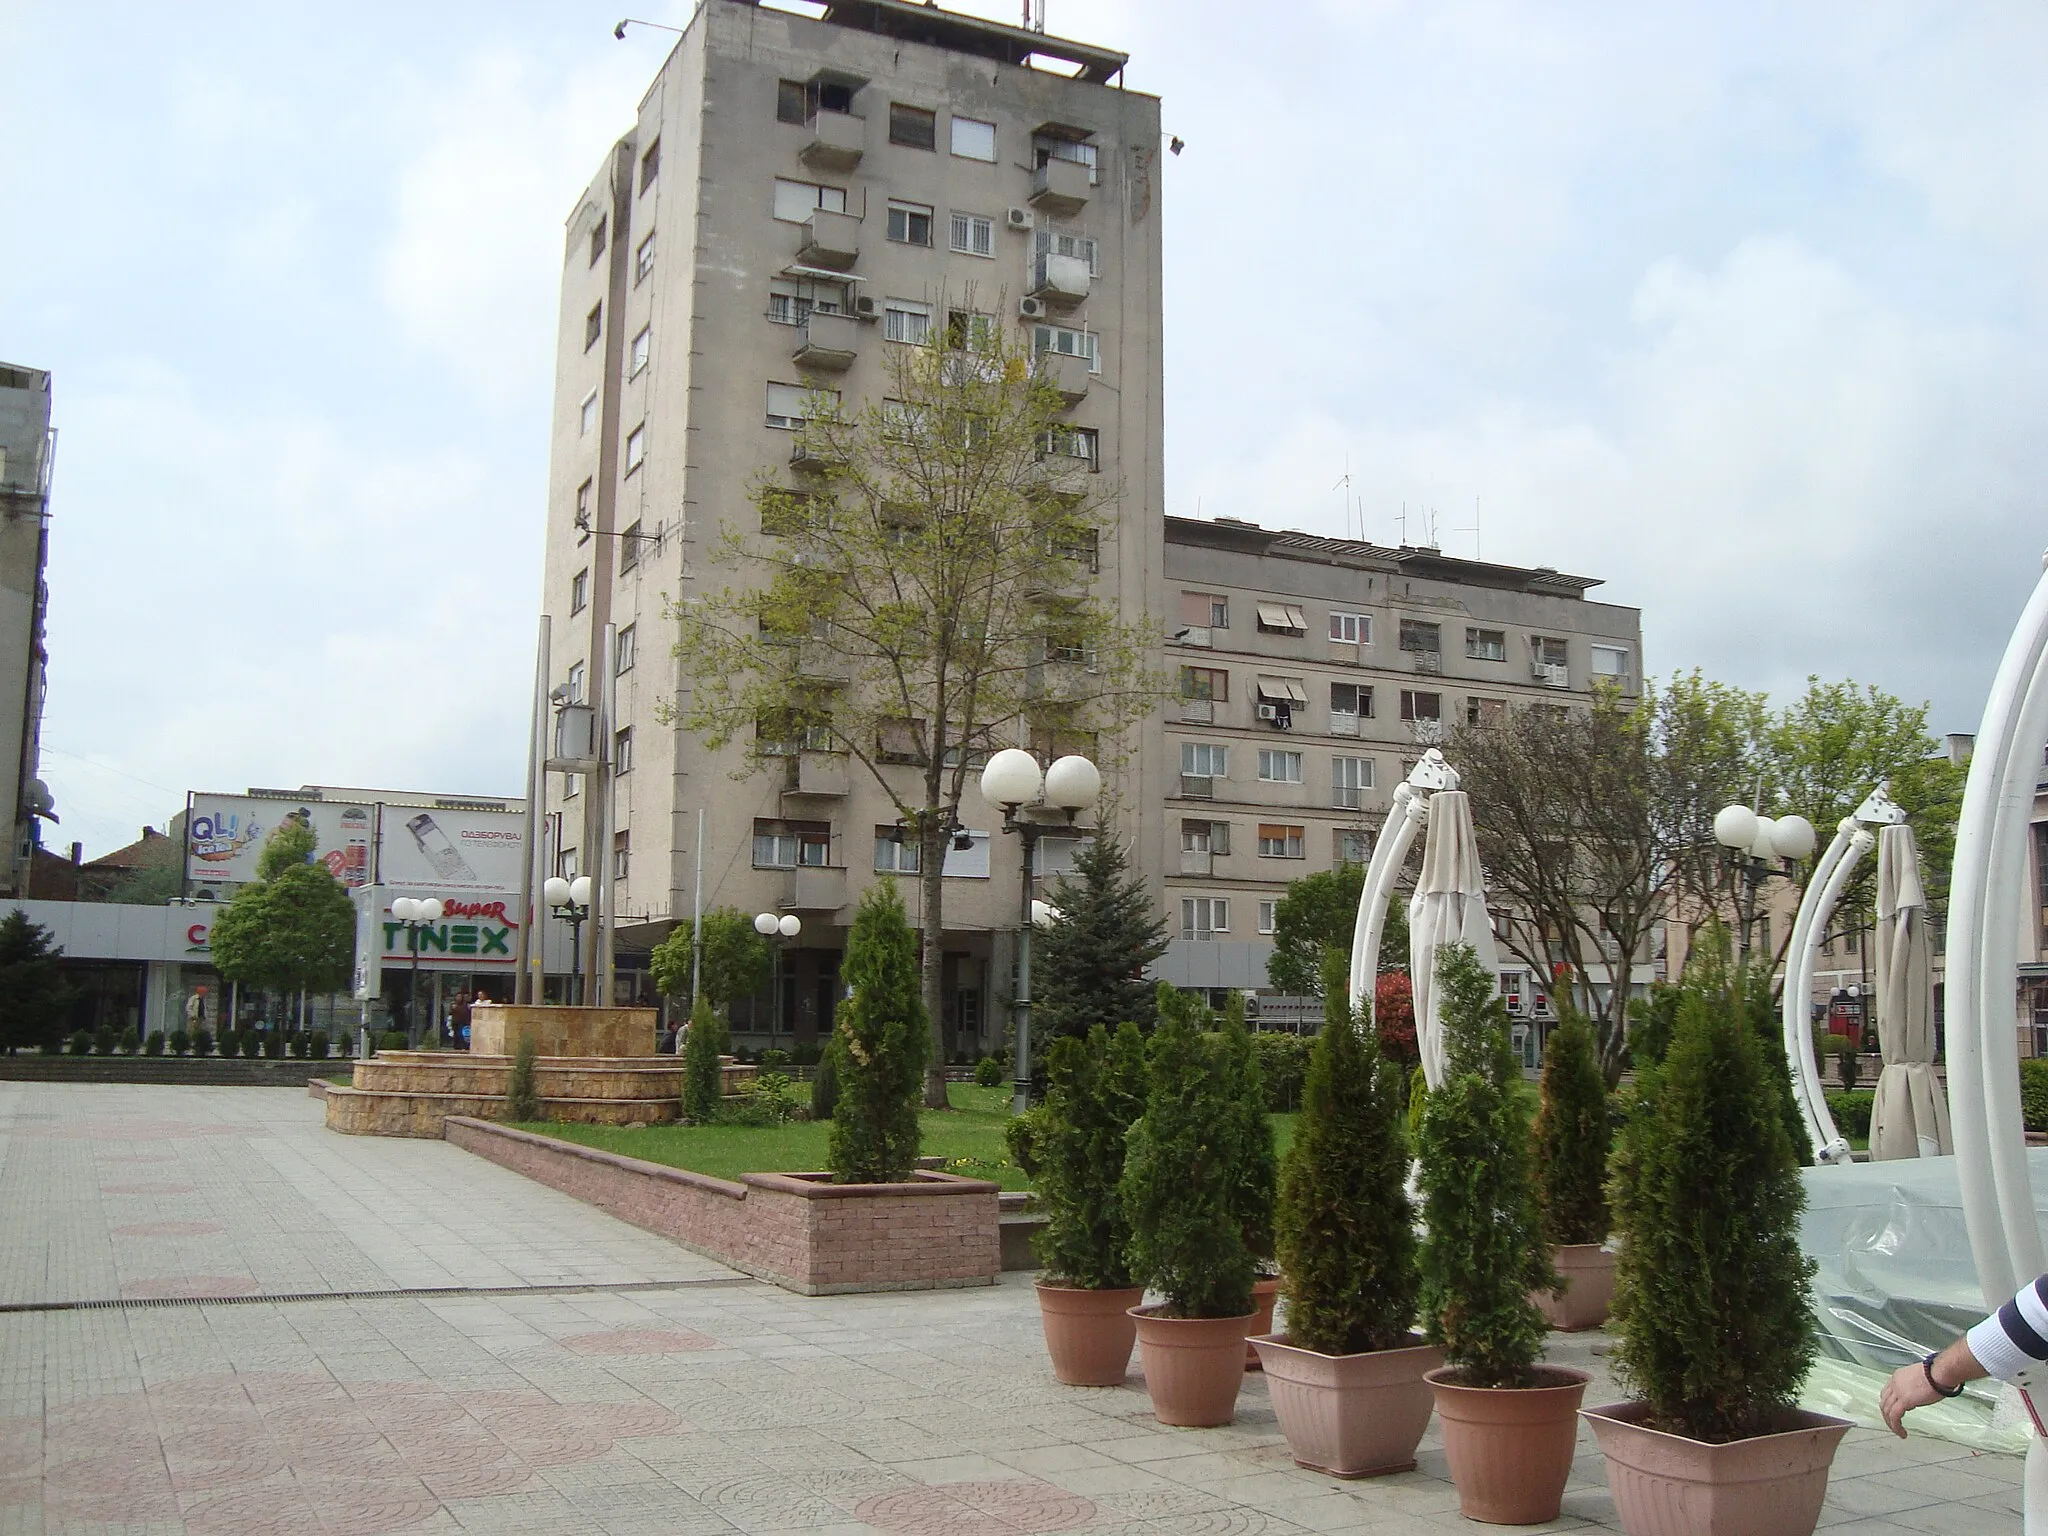 Photo showing: City Square, Kumanovo, Macedonia.